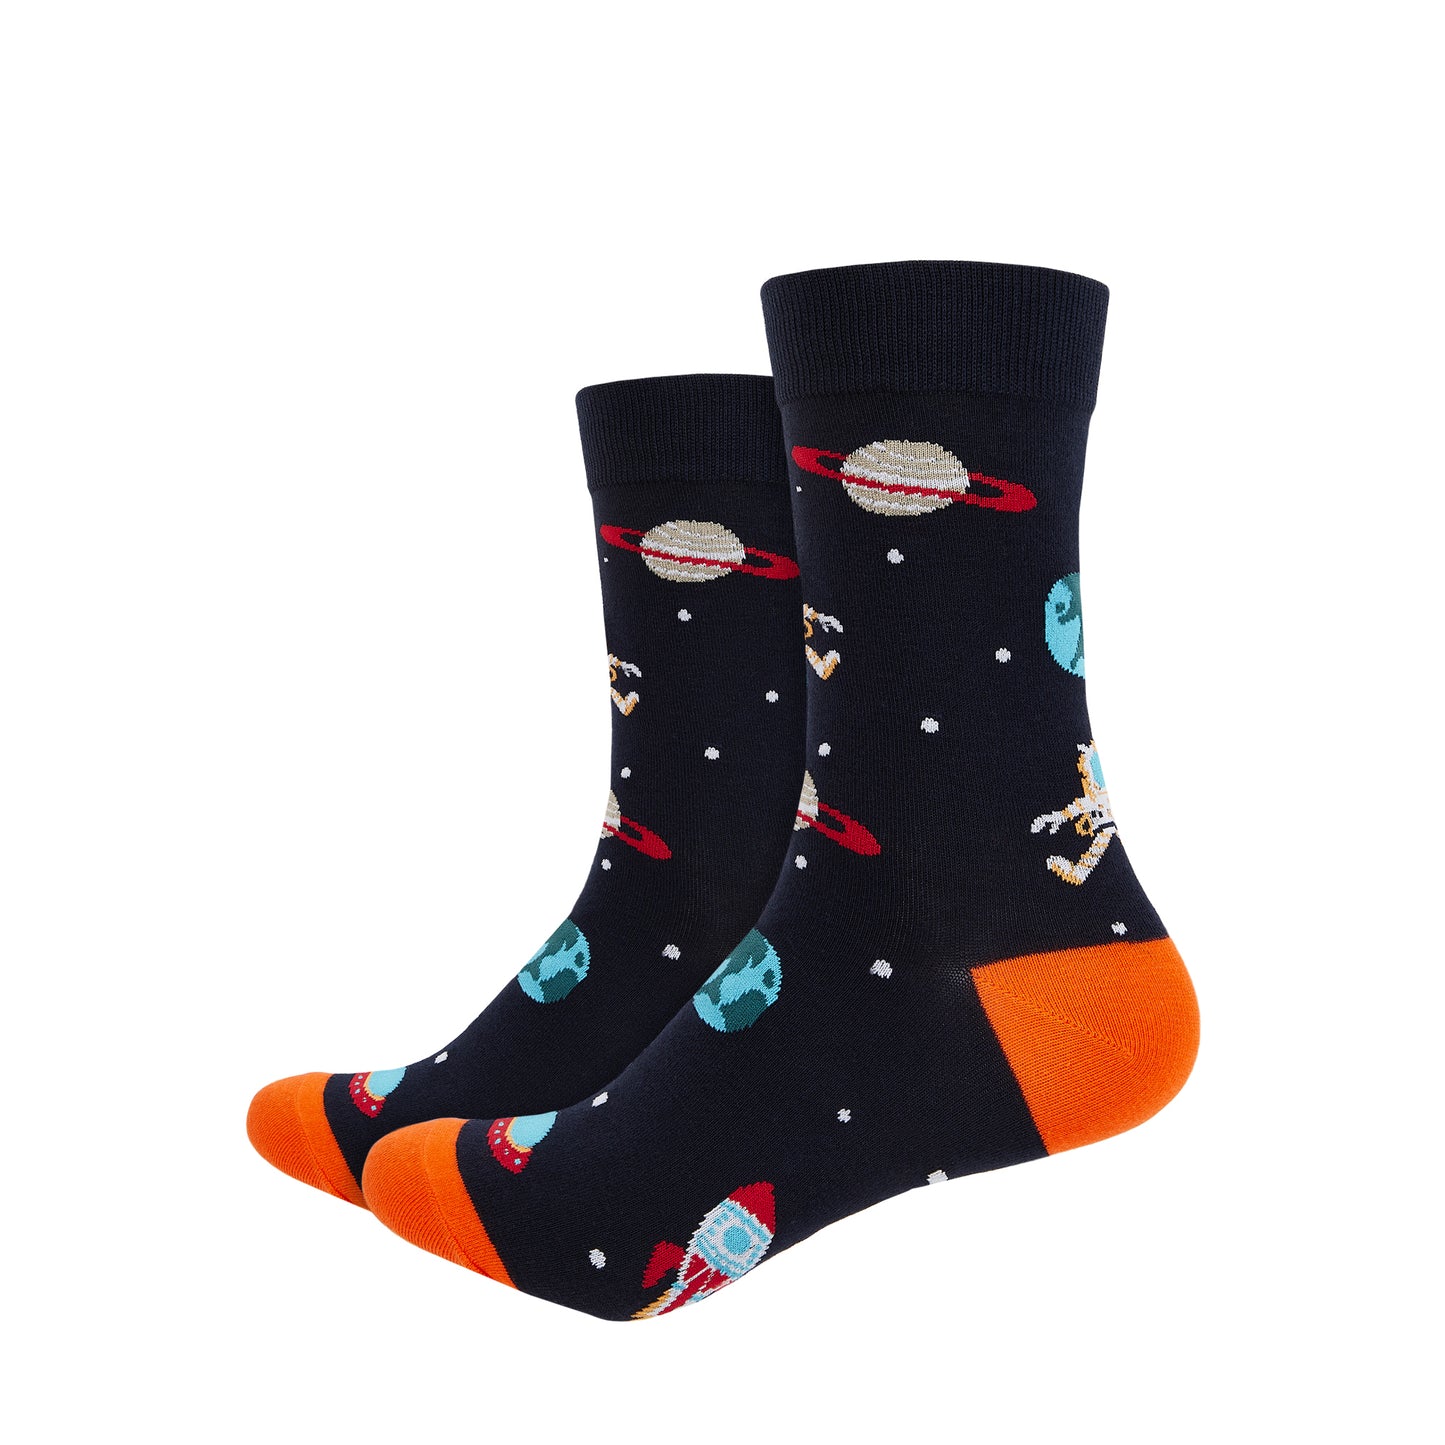 Mens Crew Length Printed Socks - Space Retro